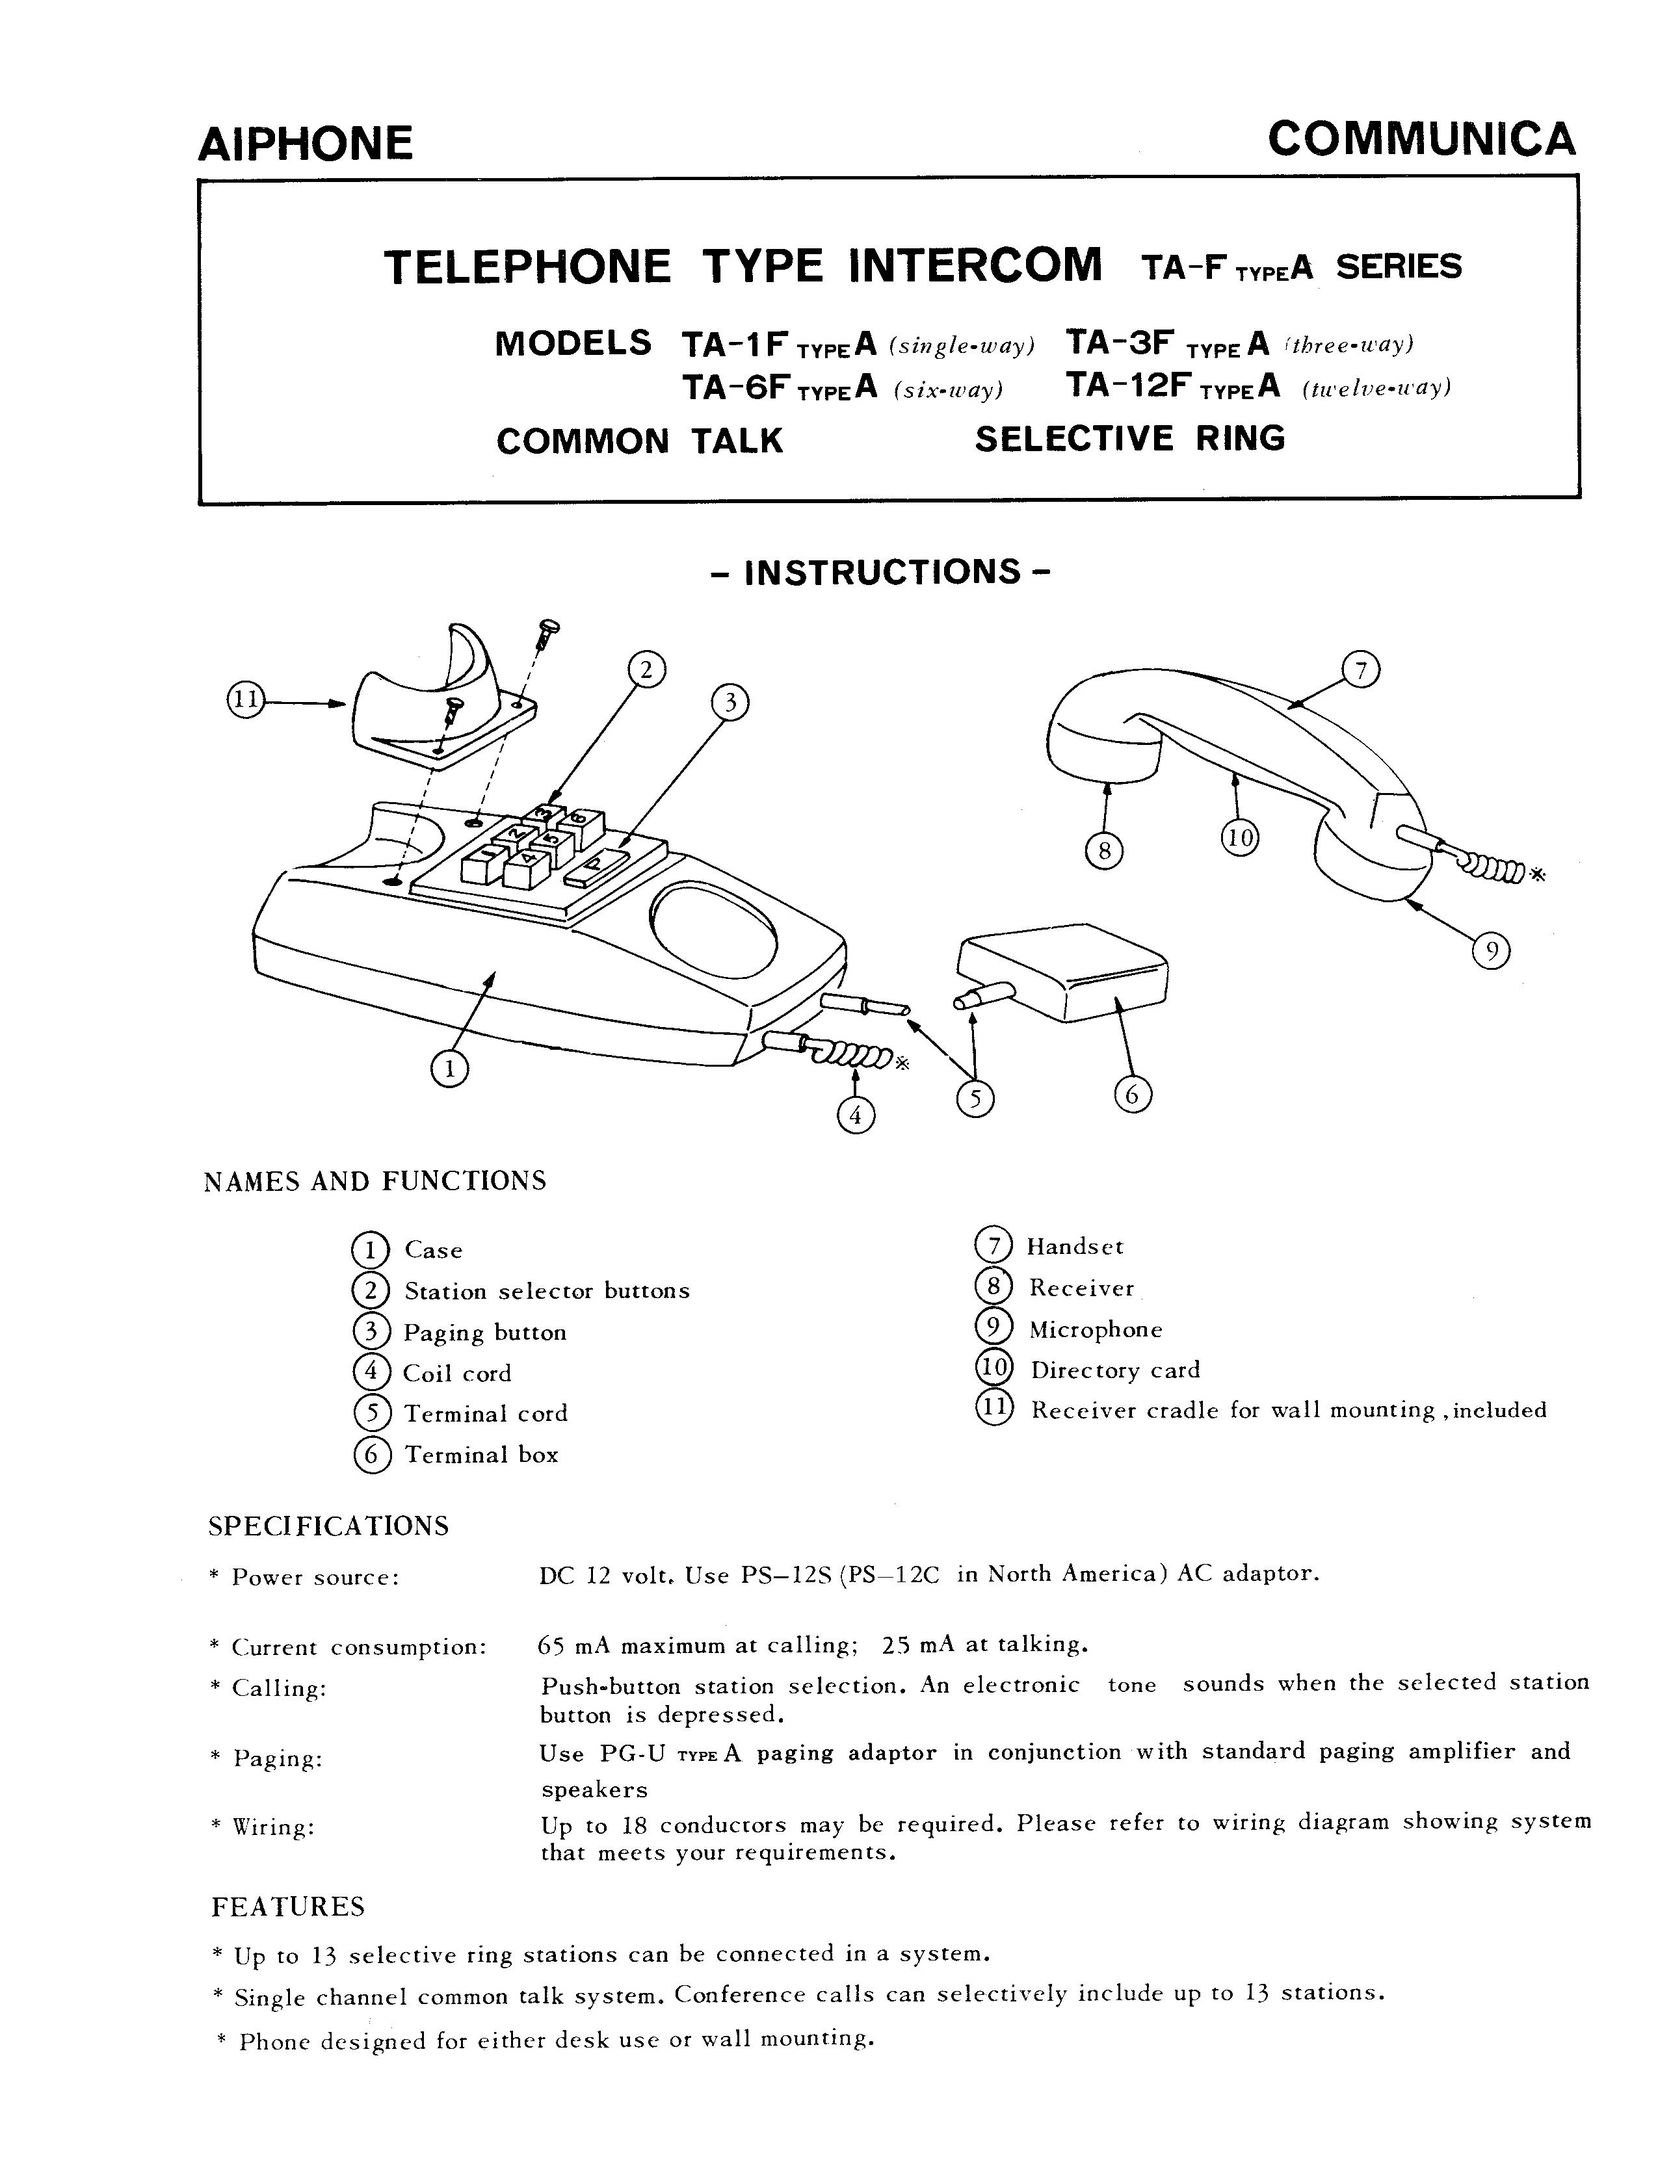 Aiphone TA-12F Telephone User Manual